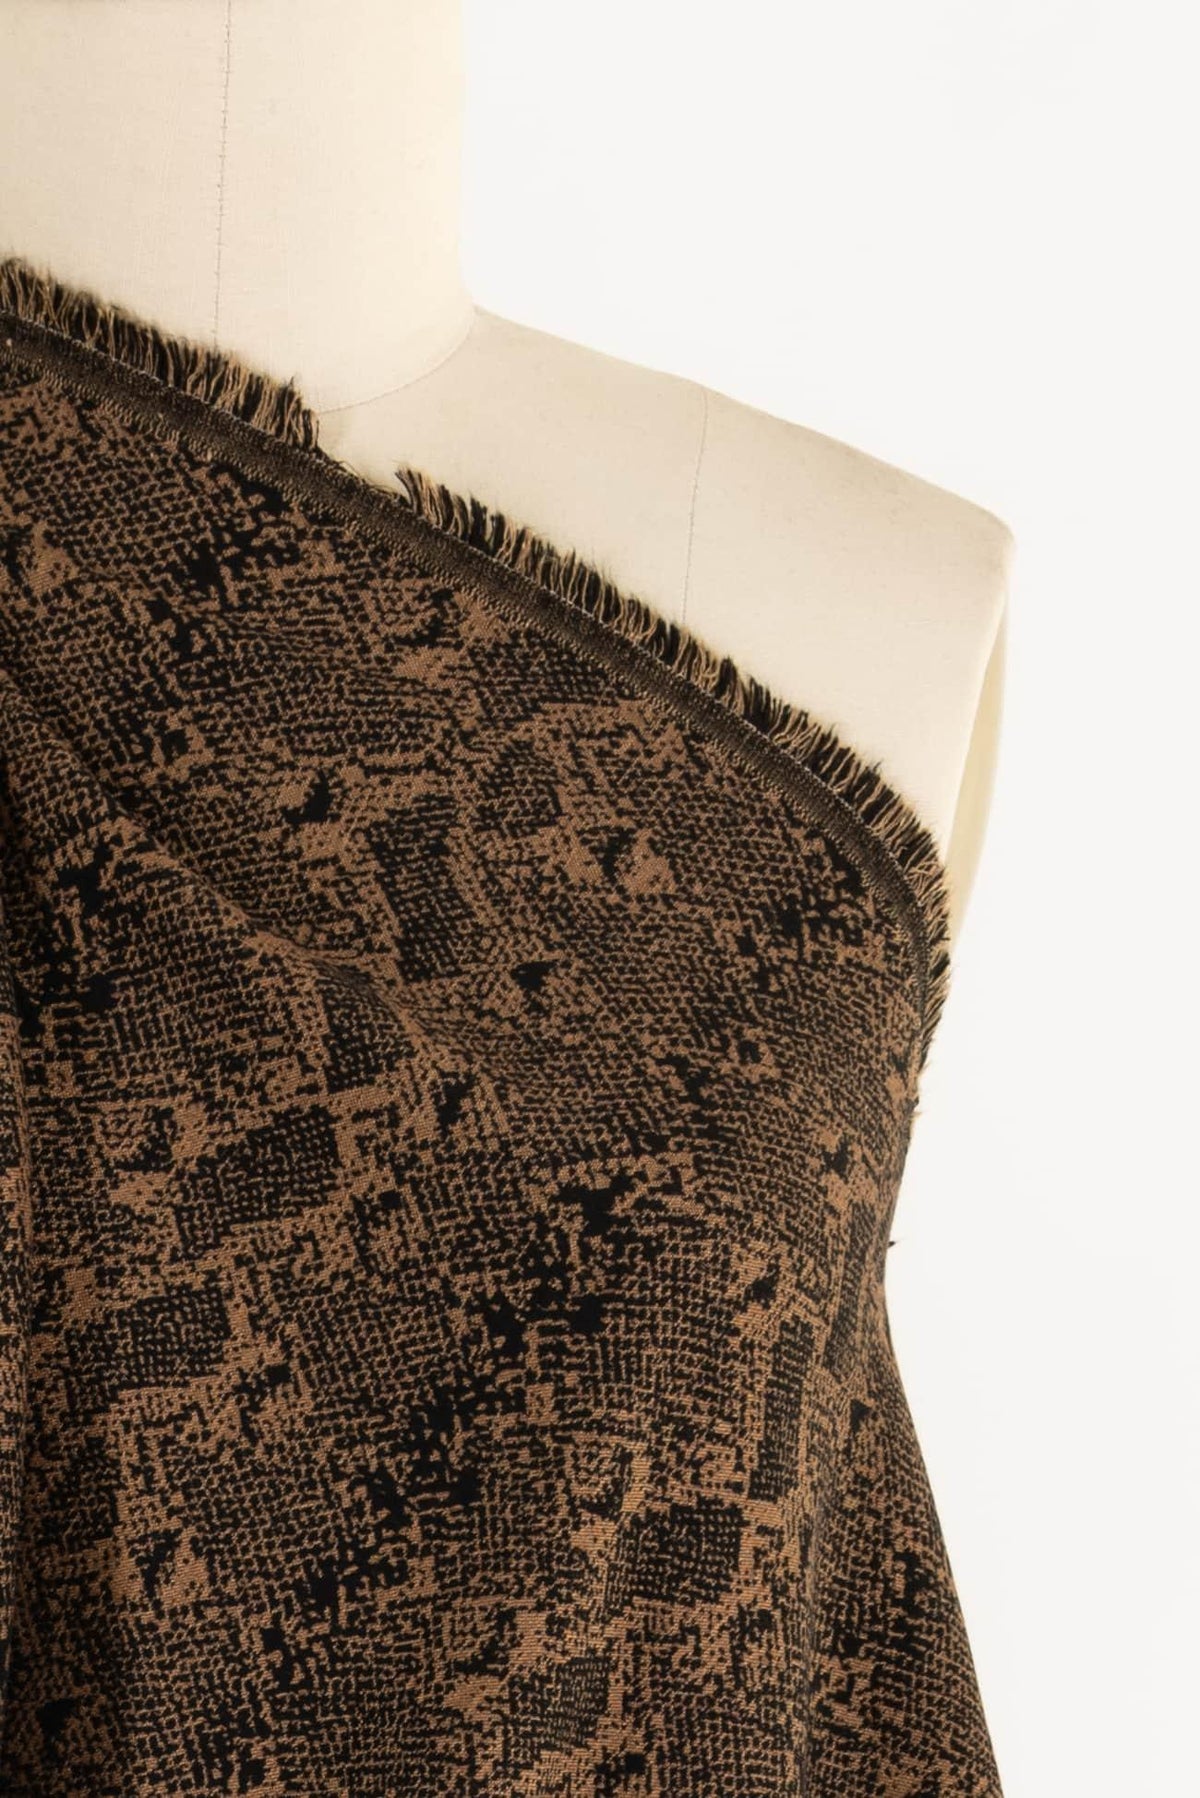 Camel Lizzie Jacquard Stretch Woven - Marcy Tilton Fabrics